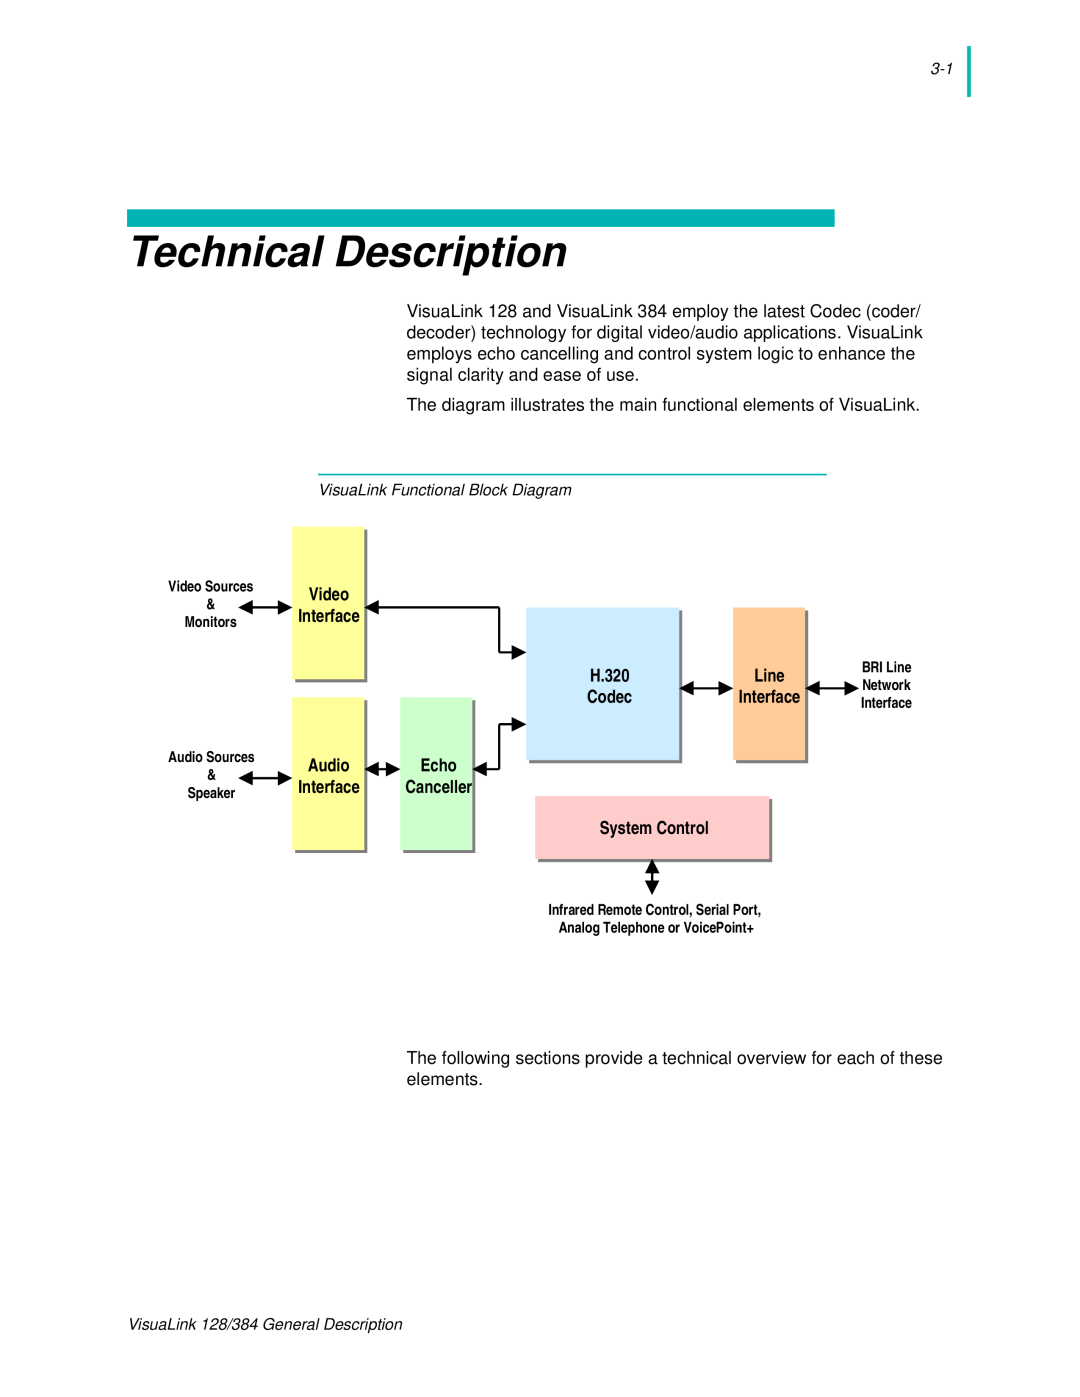 NEC 128 manual Technical Description, Codec, Interface, System Control 